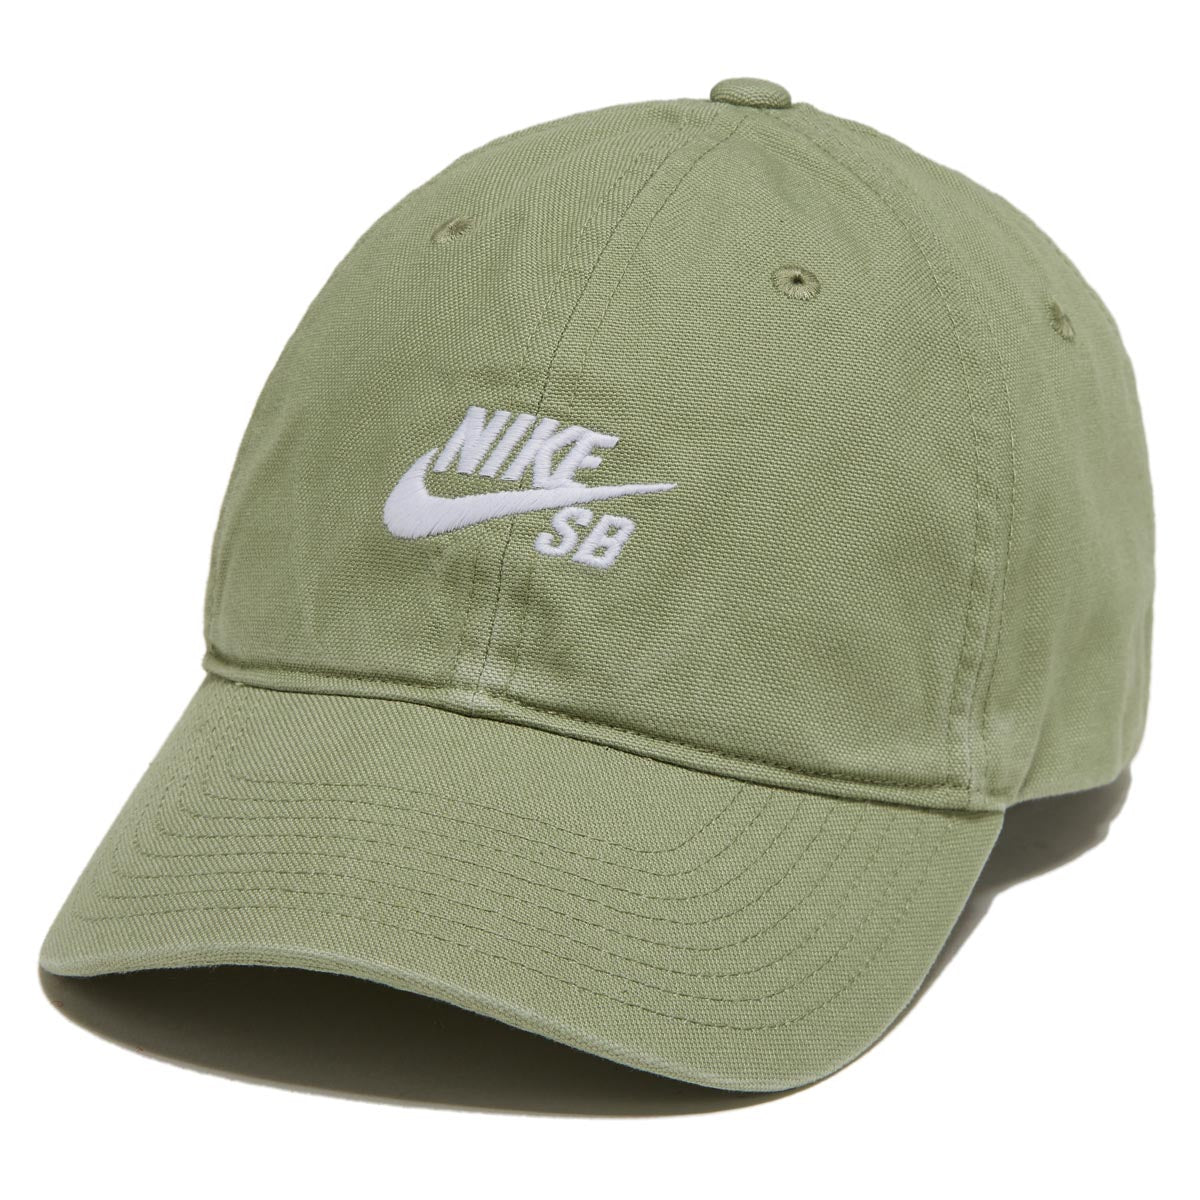 Nike SB Club Hat - Oil Green/White image 1